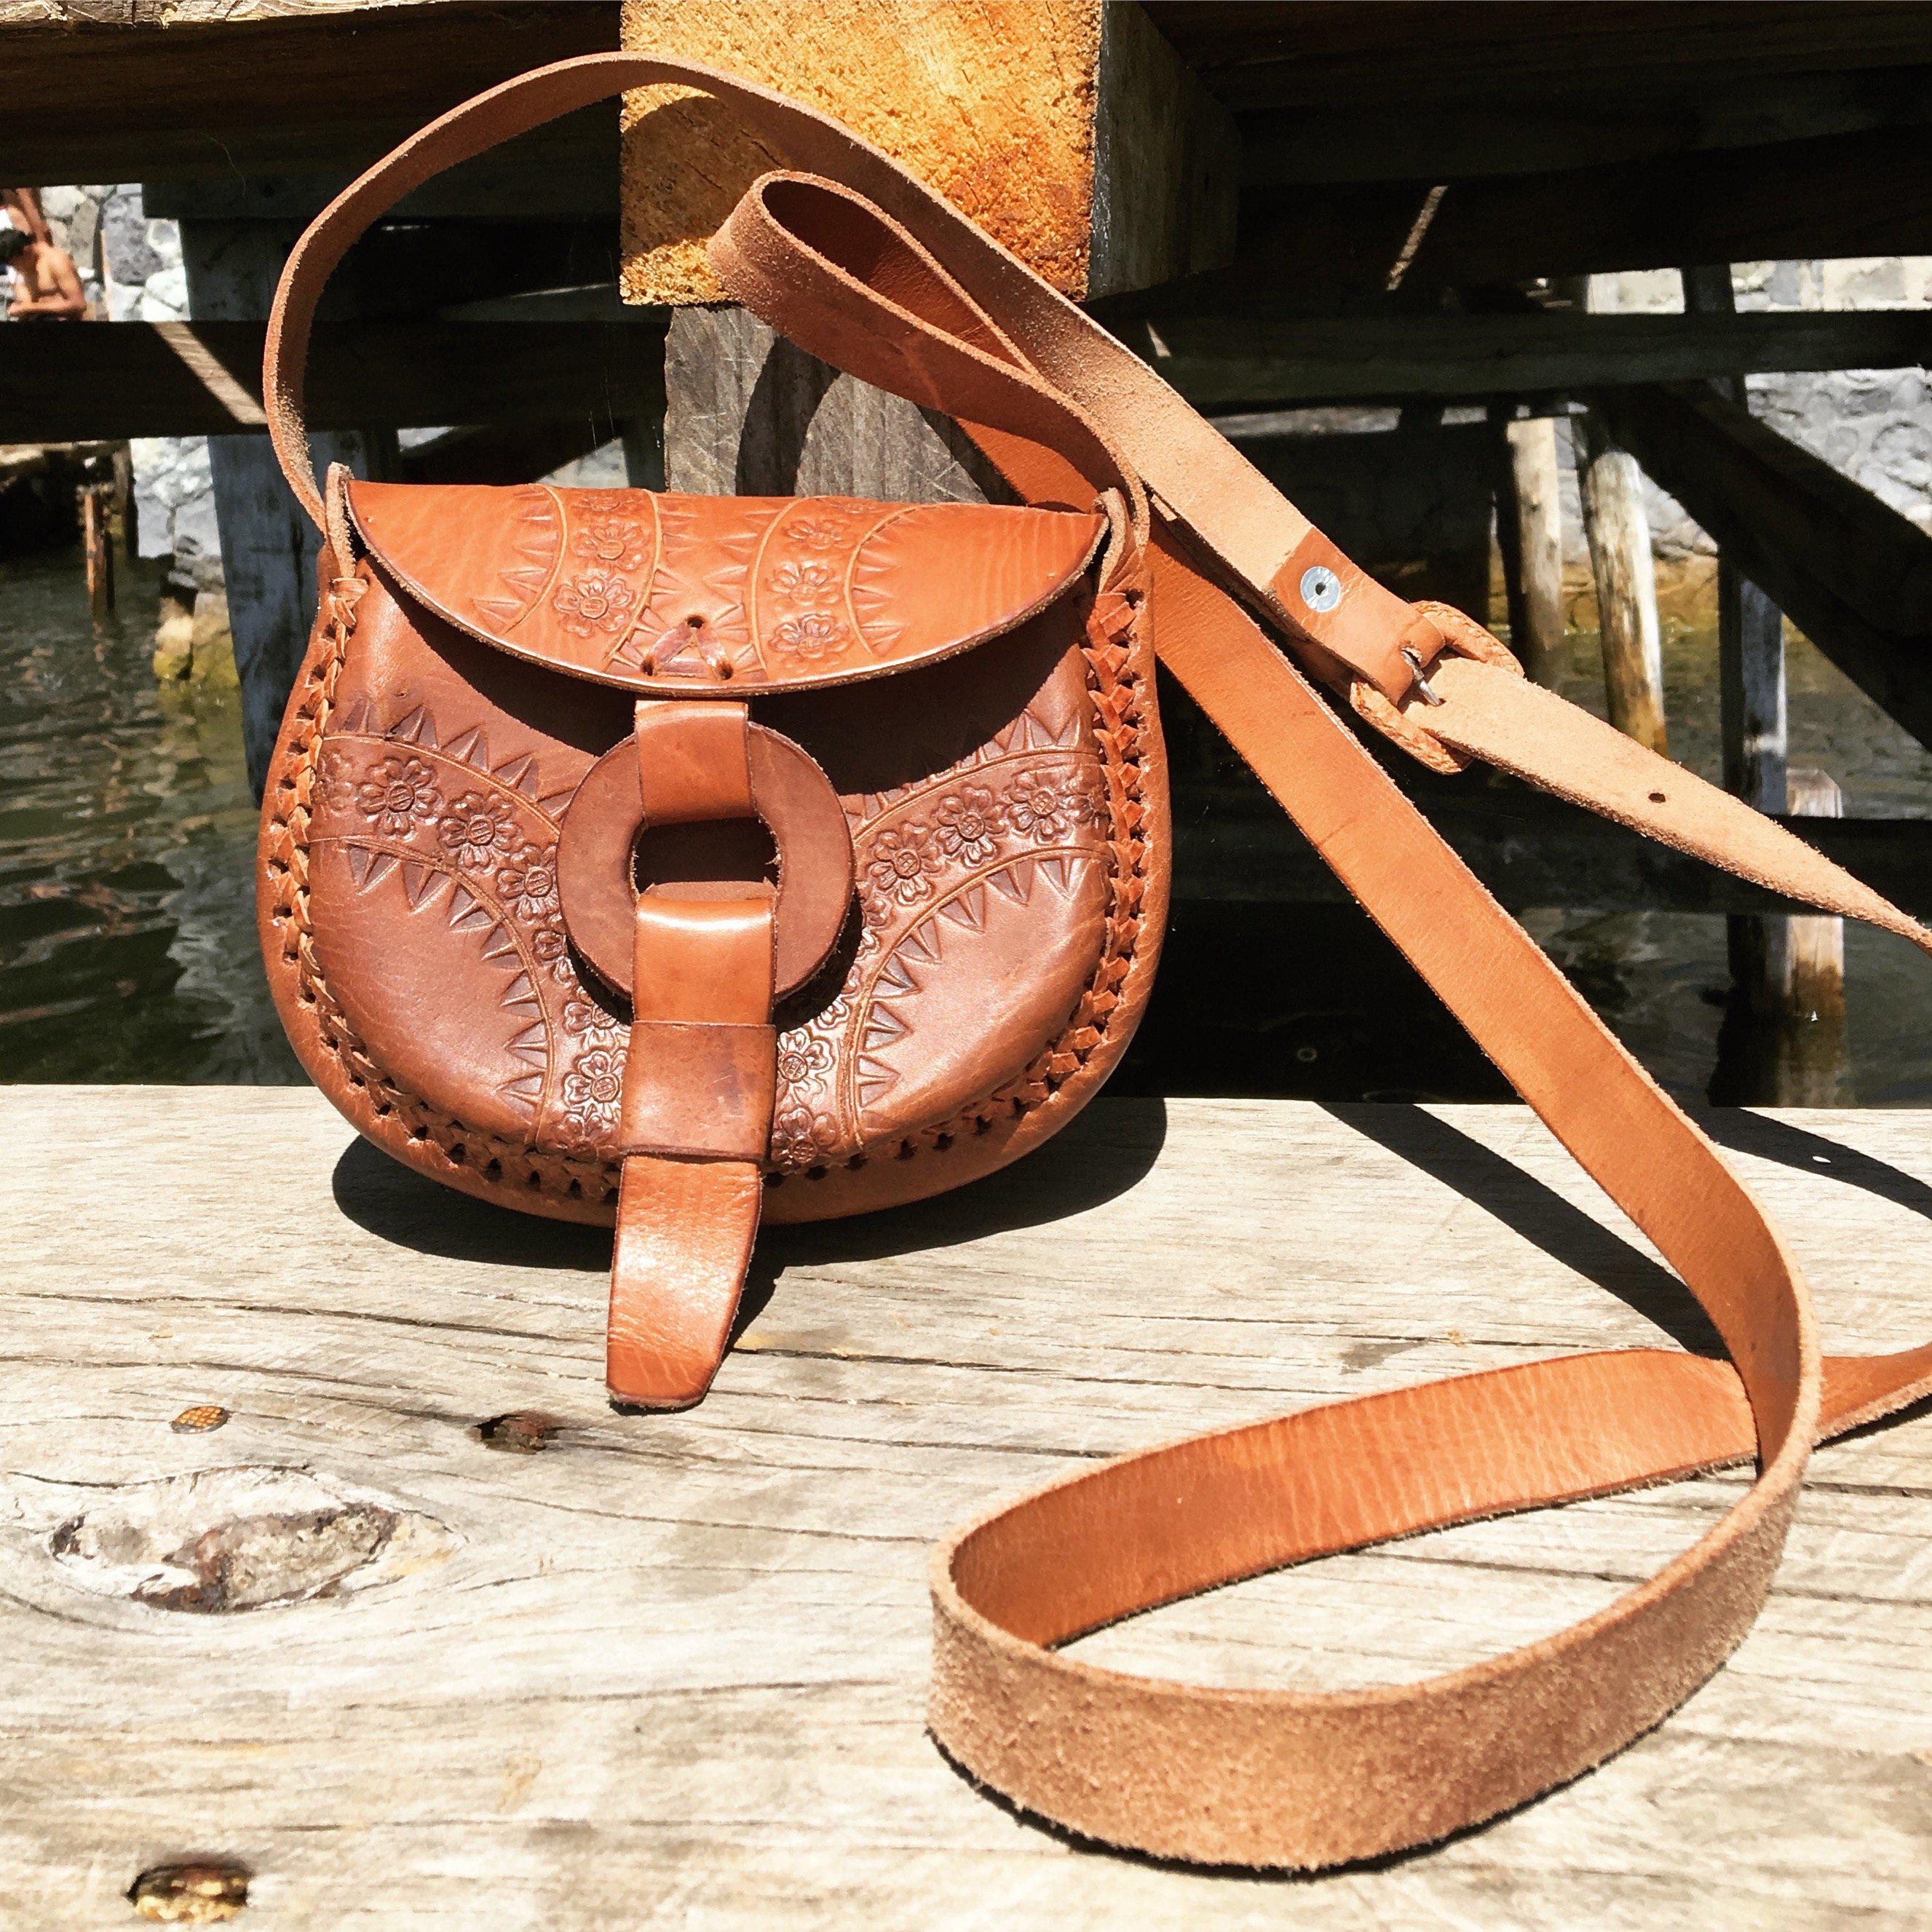 Handmade Leather Bag, Leather Handbag, Leather Bag, Saddle Bag BLACK BROWN  COLOR | eBay